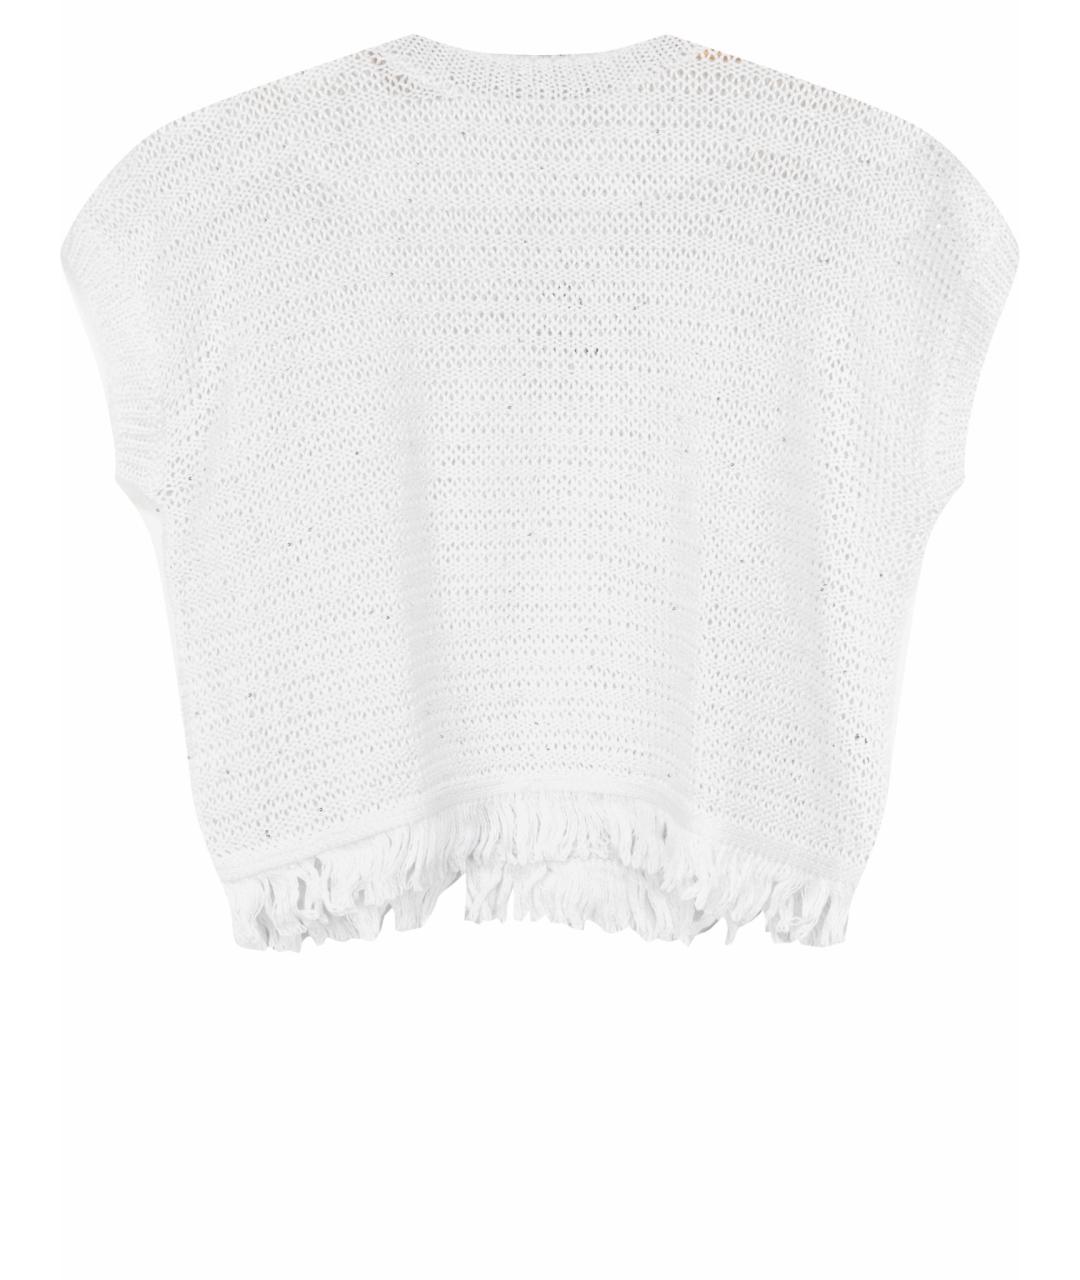 PESERICO Белый хлопковый джемпер / свитер, фото 1